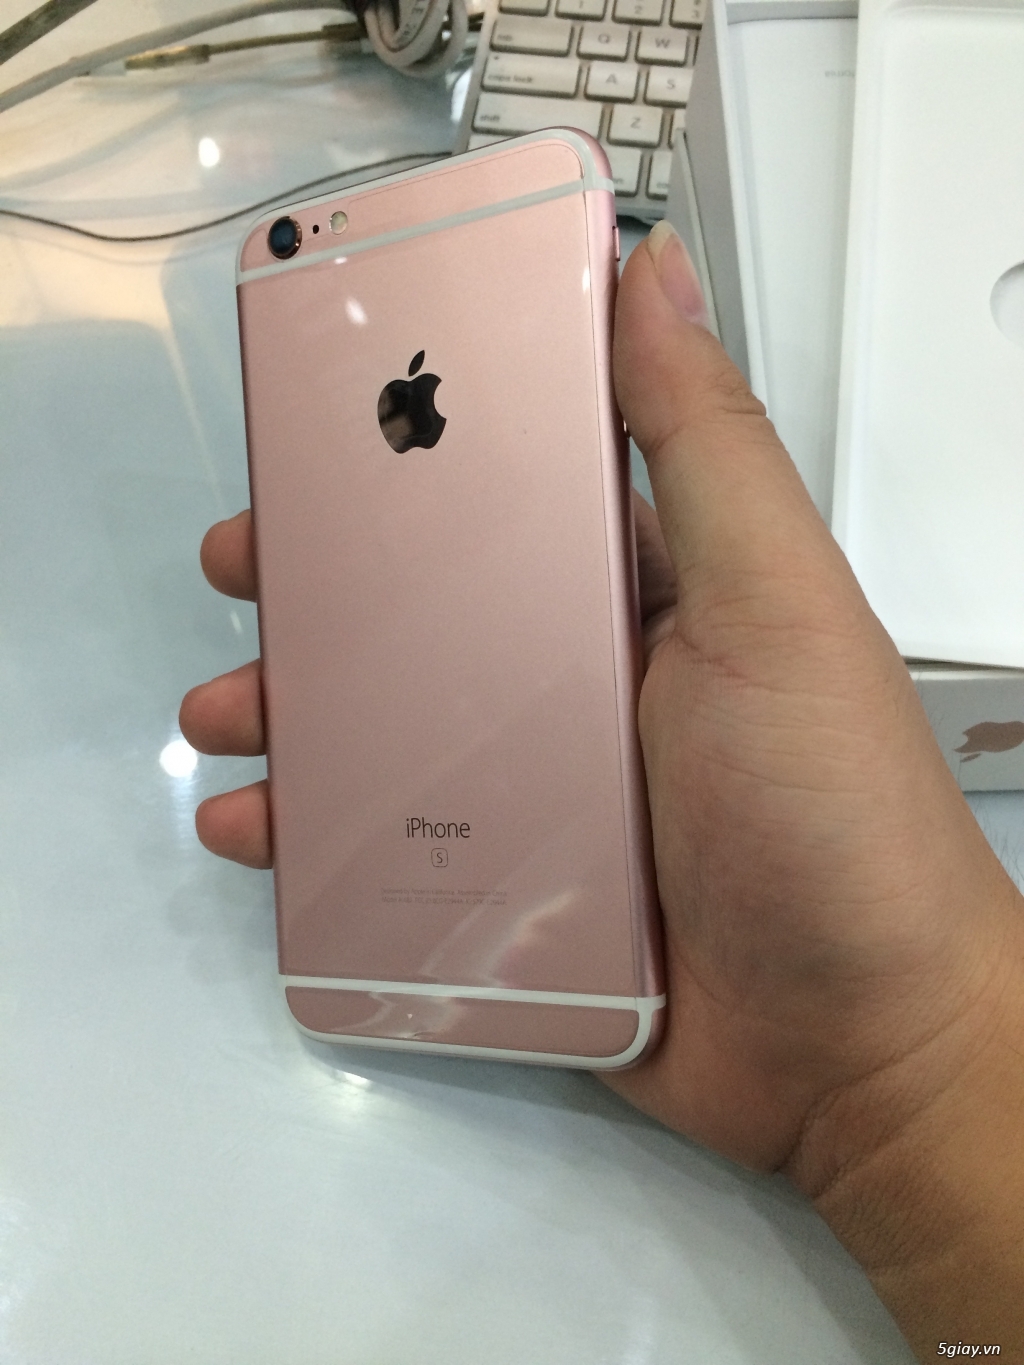 iPhone 6S Plus 16Gb Rose Gold like new fullbox bảo hành 1 đổi 1 - 2